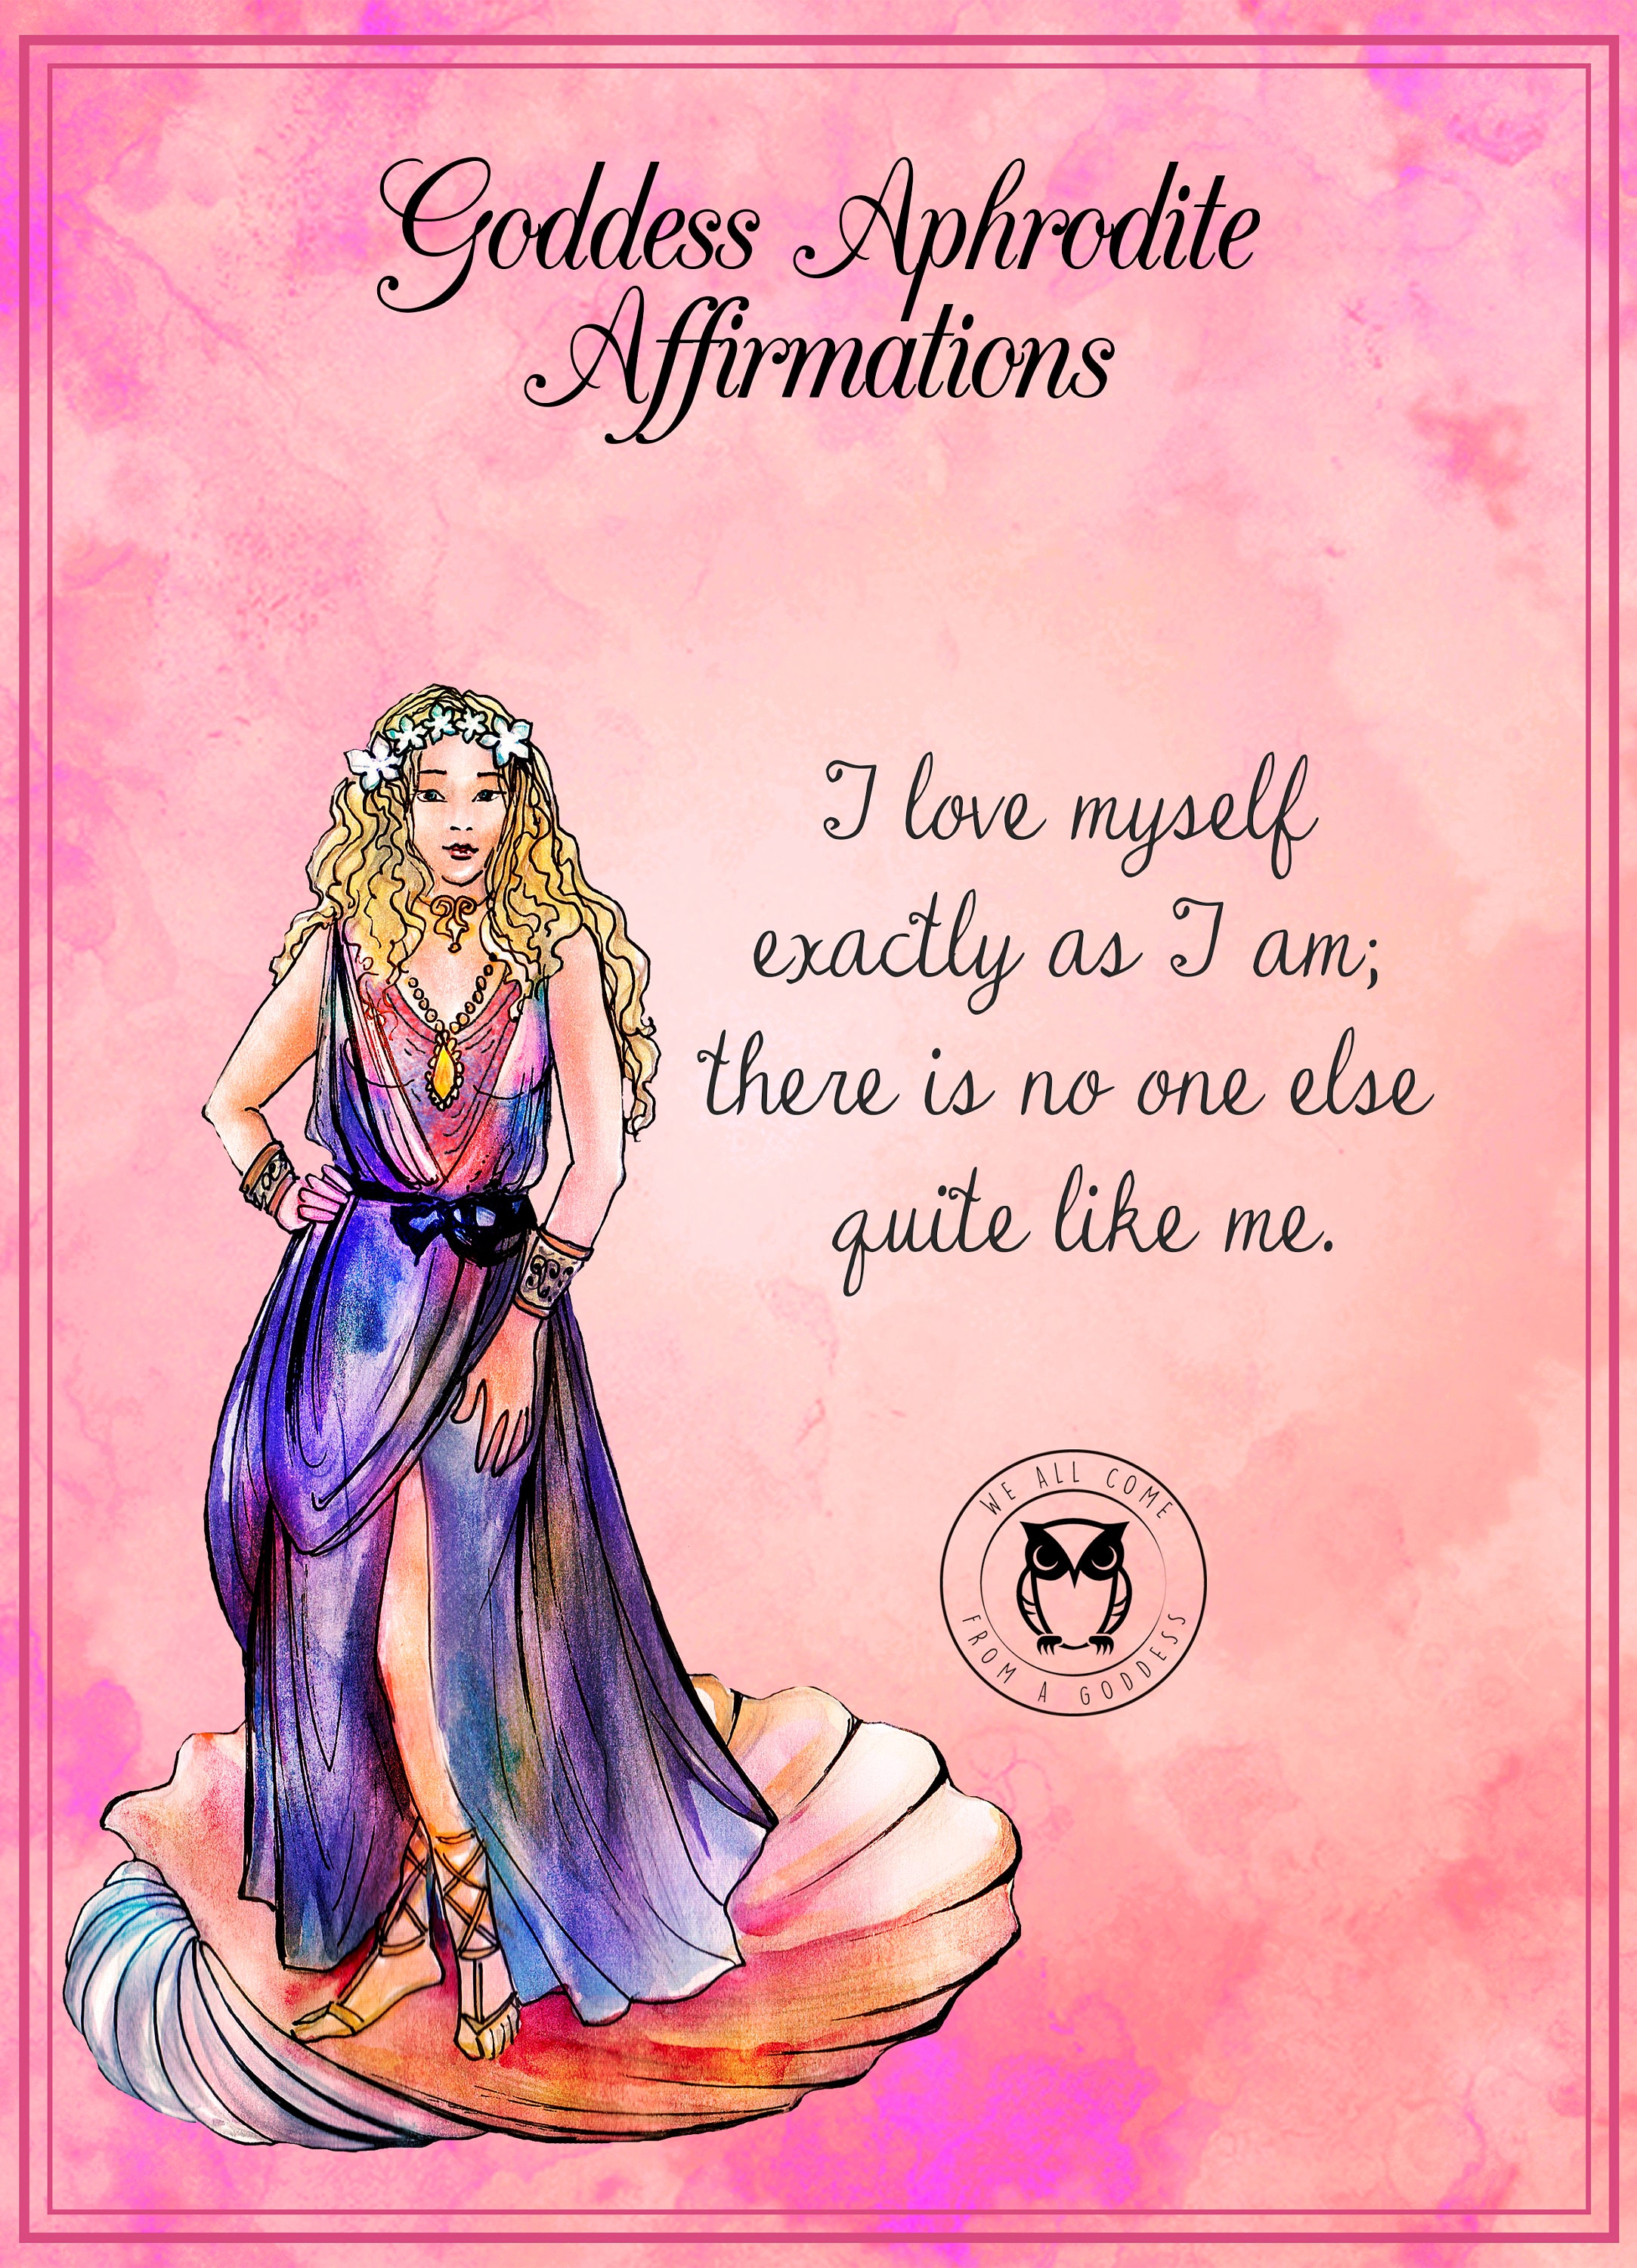 Are You an Aphrodite Goddess Aphrodite Affirmation Cards 20 Porn Pic Hd